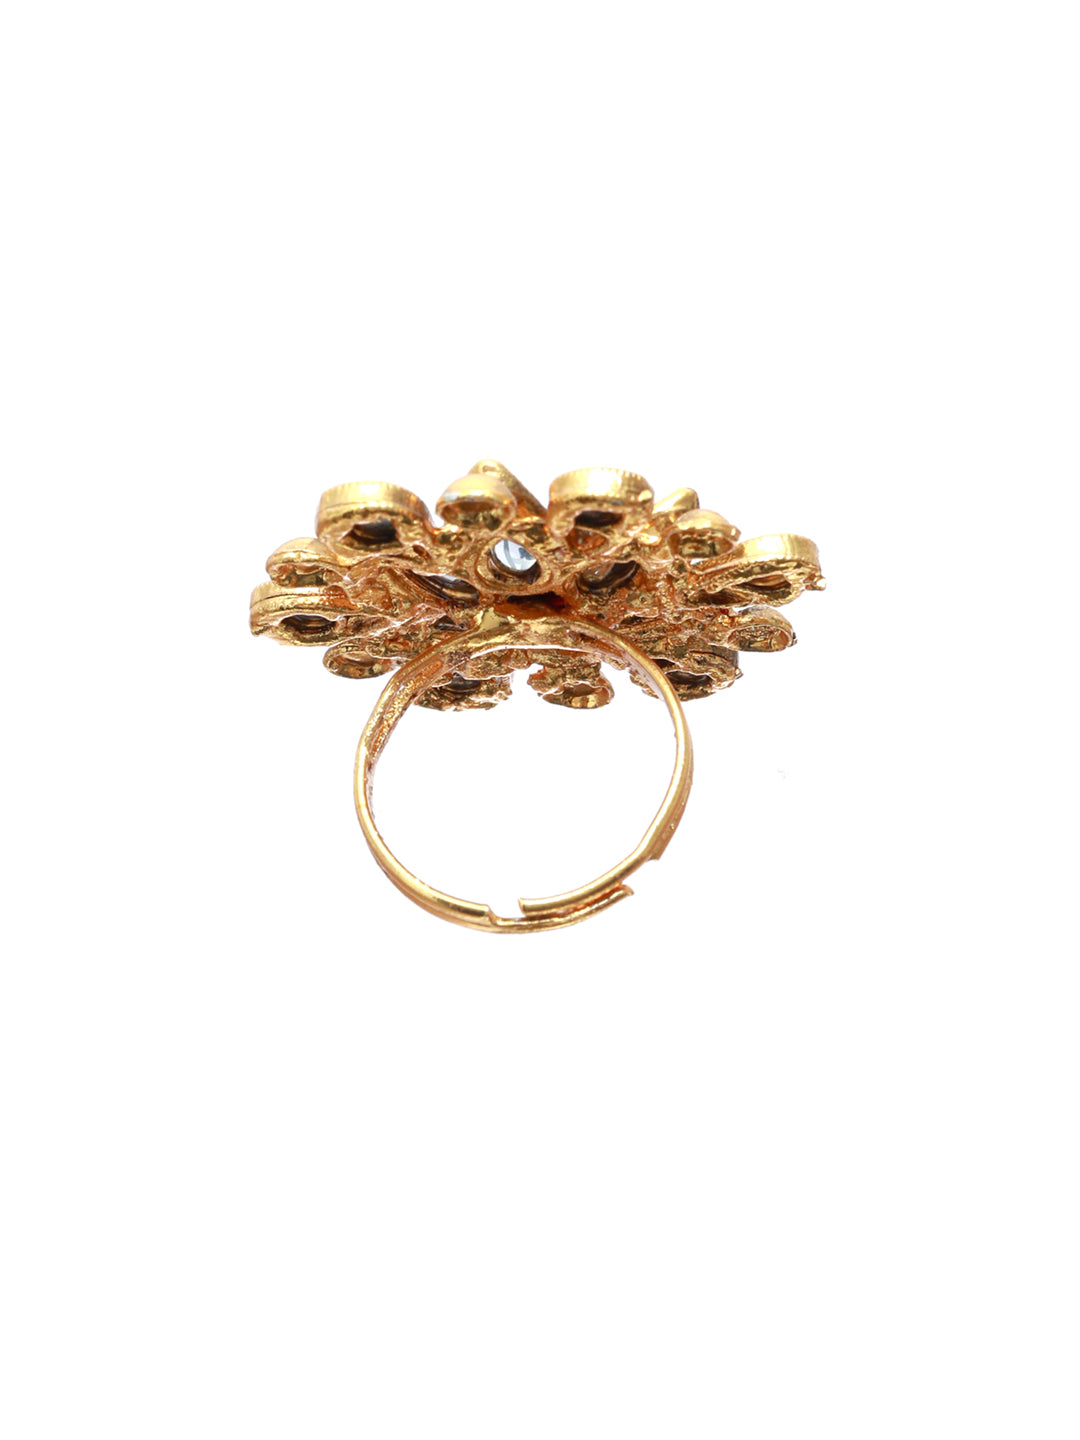 Alluring Meenakari Gold Umbrella Ring